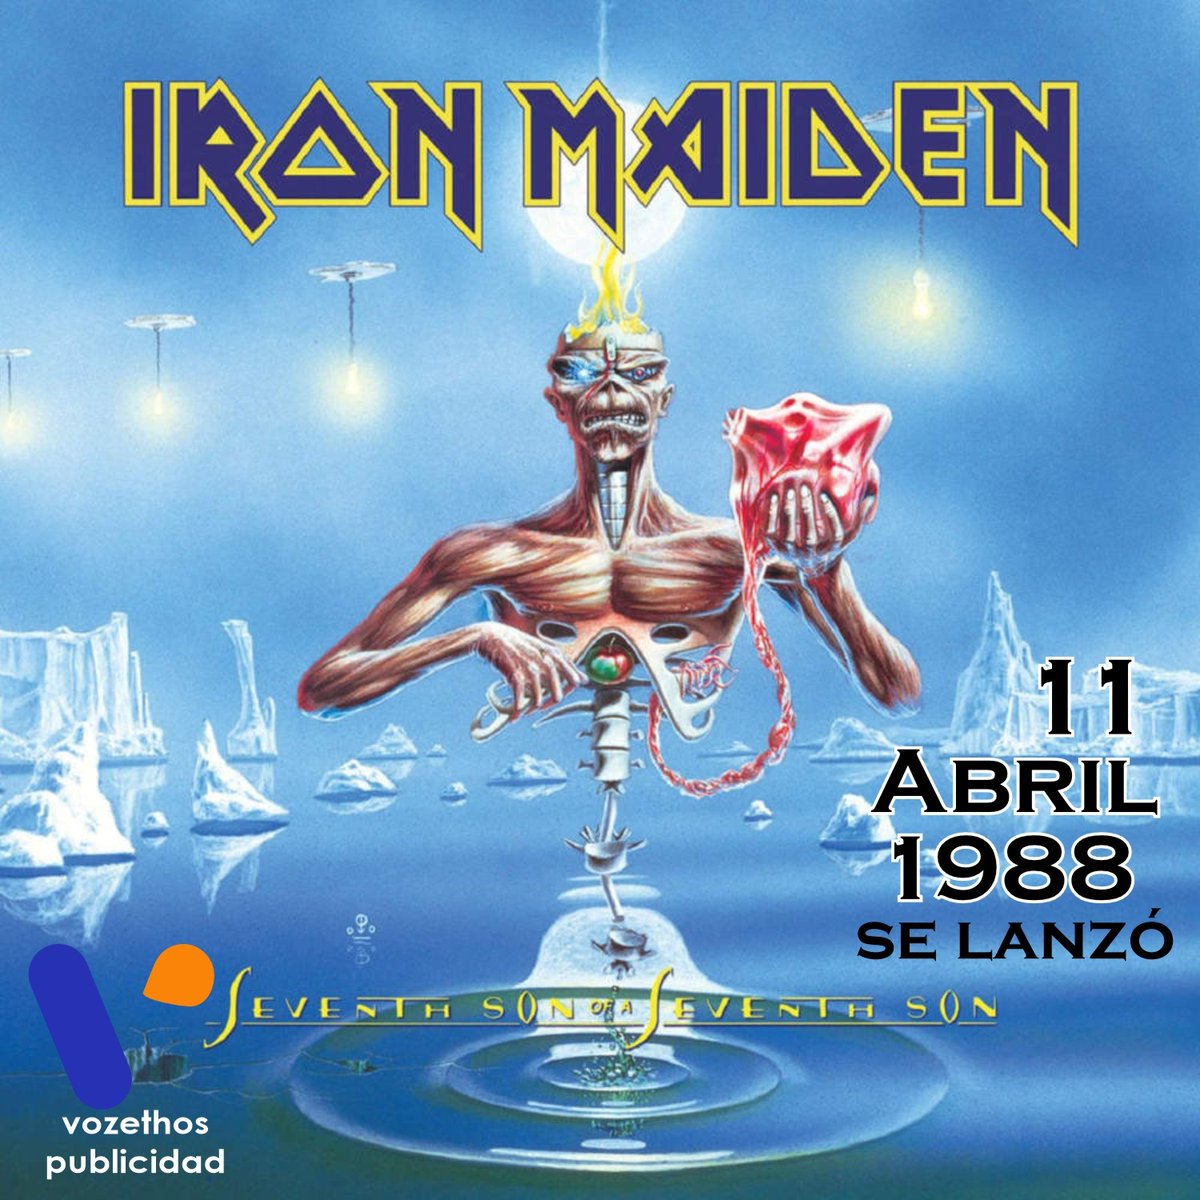 Seventh son of a seventh son se lanzó el 11 de abril de 1988 #ironmaiden #seventhsonofaseventhson #britishheavymetal #music #rock #heavymetal @ironmaiden @vozethos